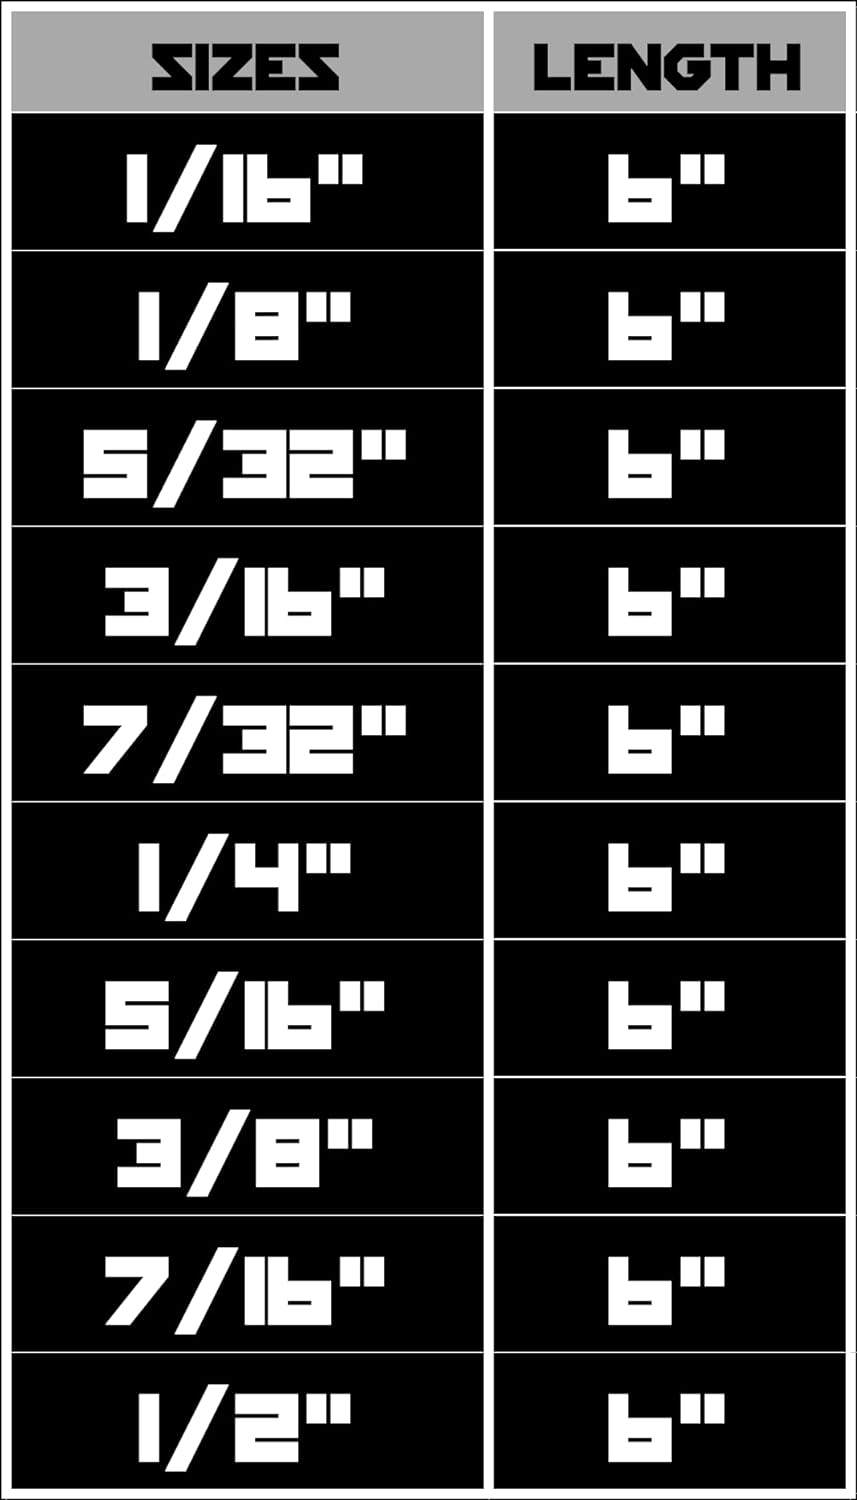 Extra Long Allen Wrench Hex Bit Socket Set (10 Pack) - Long 6" Hex Bit in 3/8" Drive Sizes: 1/16", 1/8", 5/32", 3/16", 7/32", 1/4", 5/16", 3/8", 7/16", 1/2"